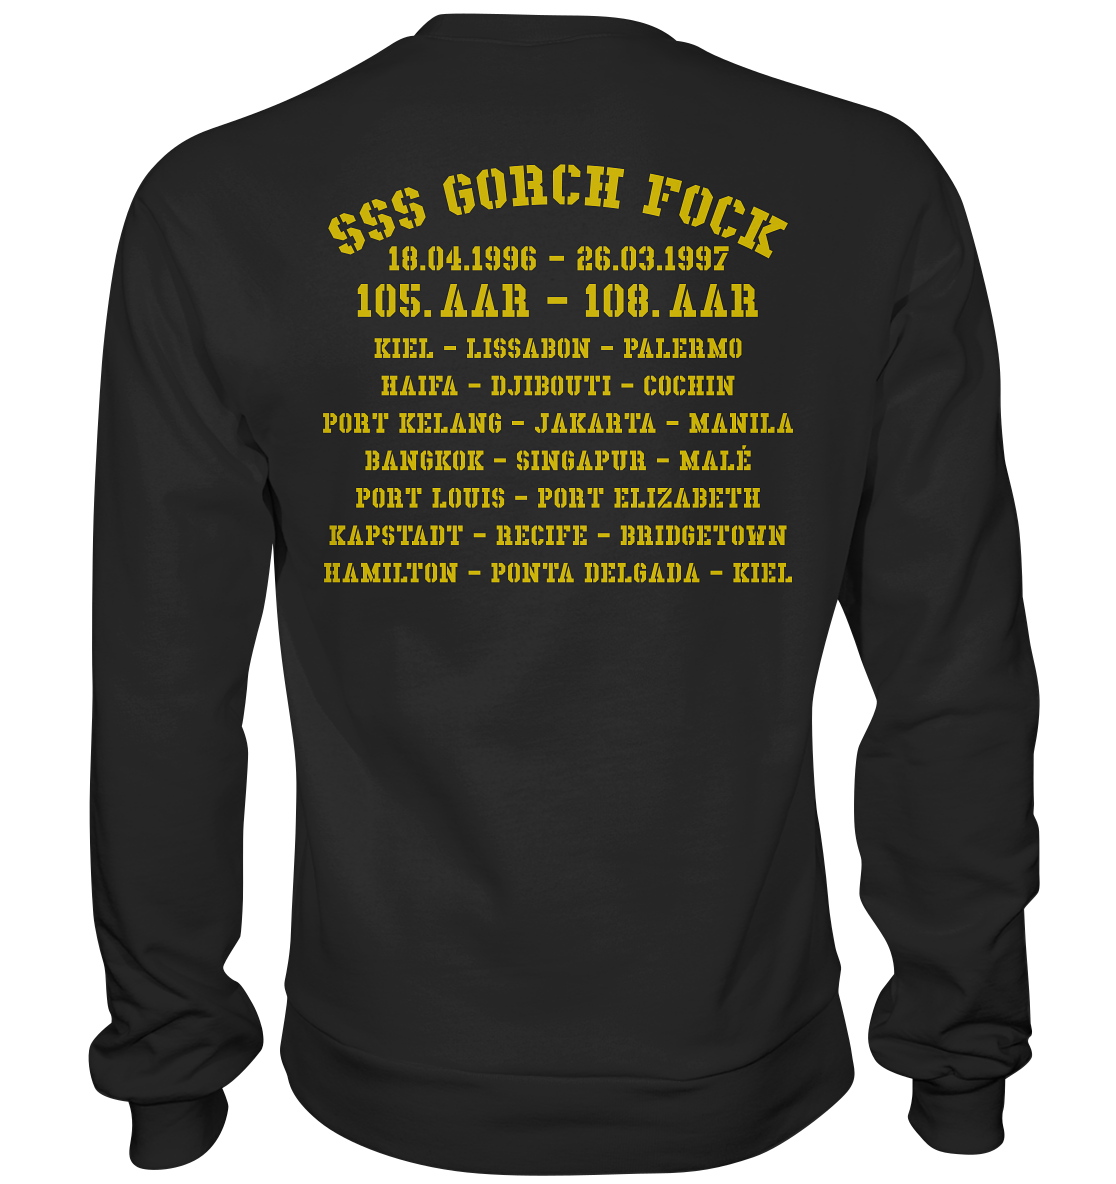 SSS GORCH FOCK 105.-108. AAR beidseitiger Druck - Premium Sweatshirt